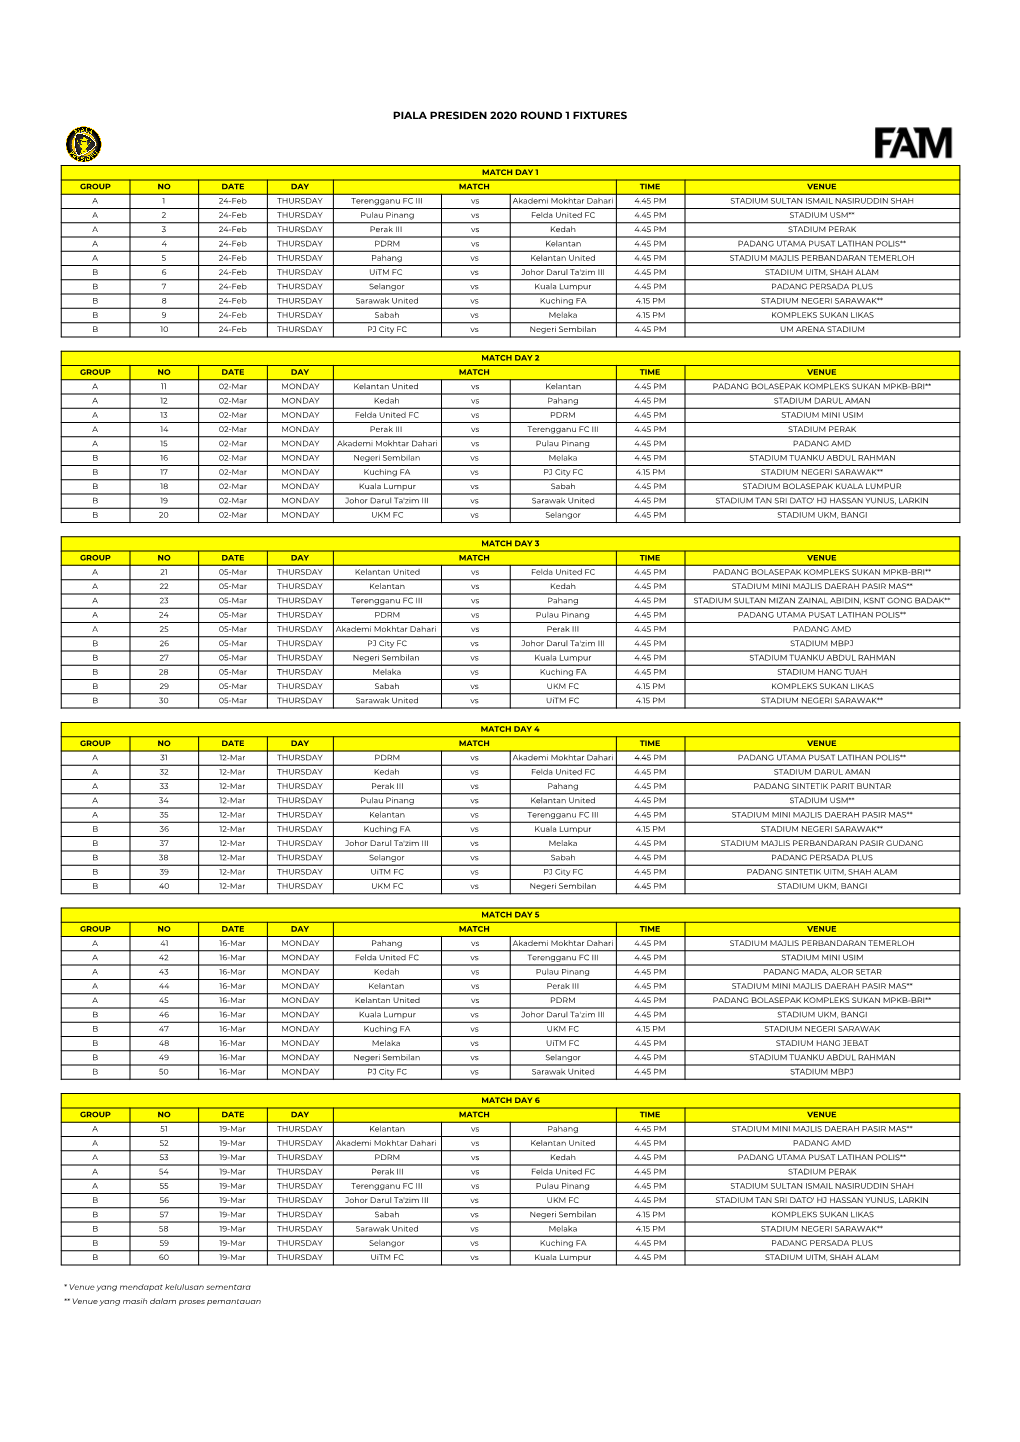 Piala Presiden 2020 Round 1 Fixtures